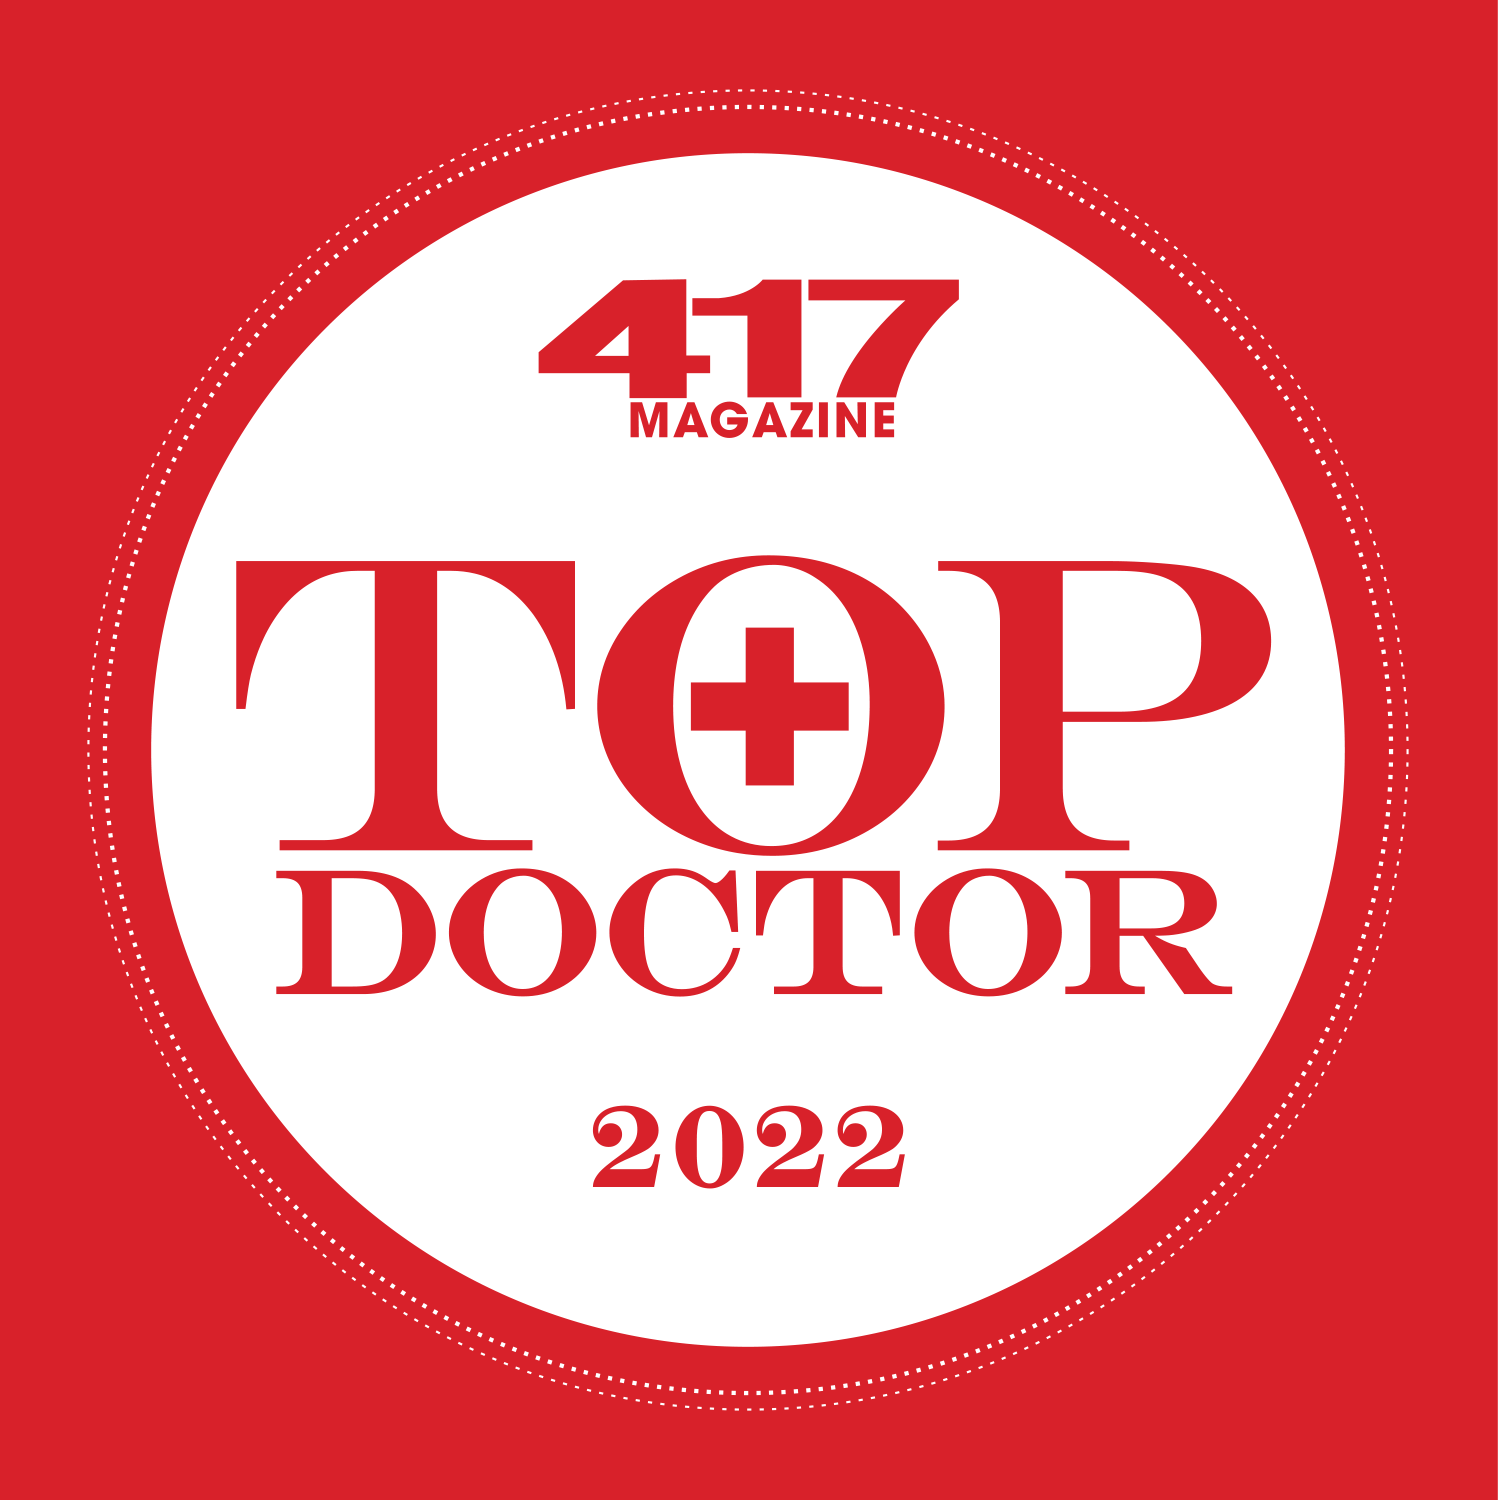 417 Magazine Top Doctor Award - Decal